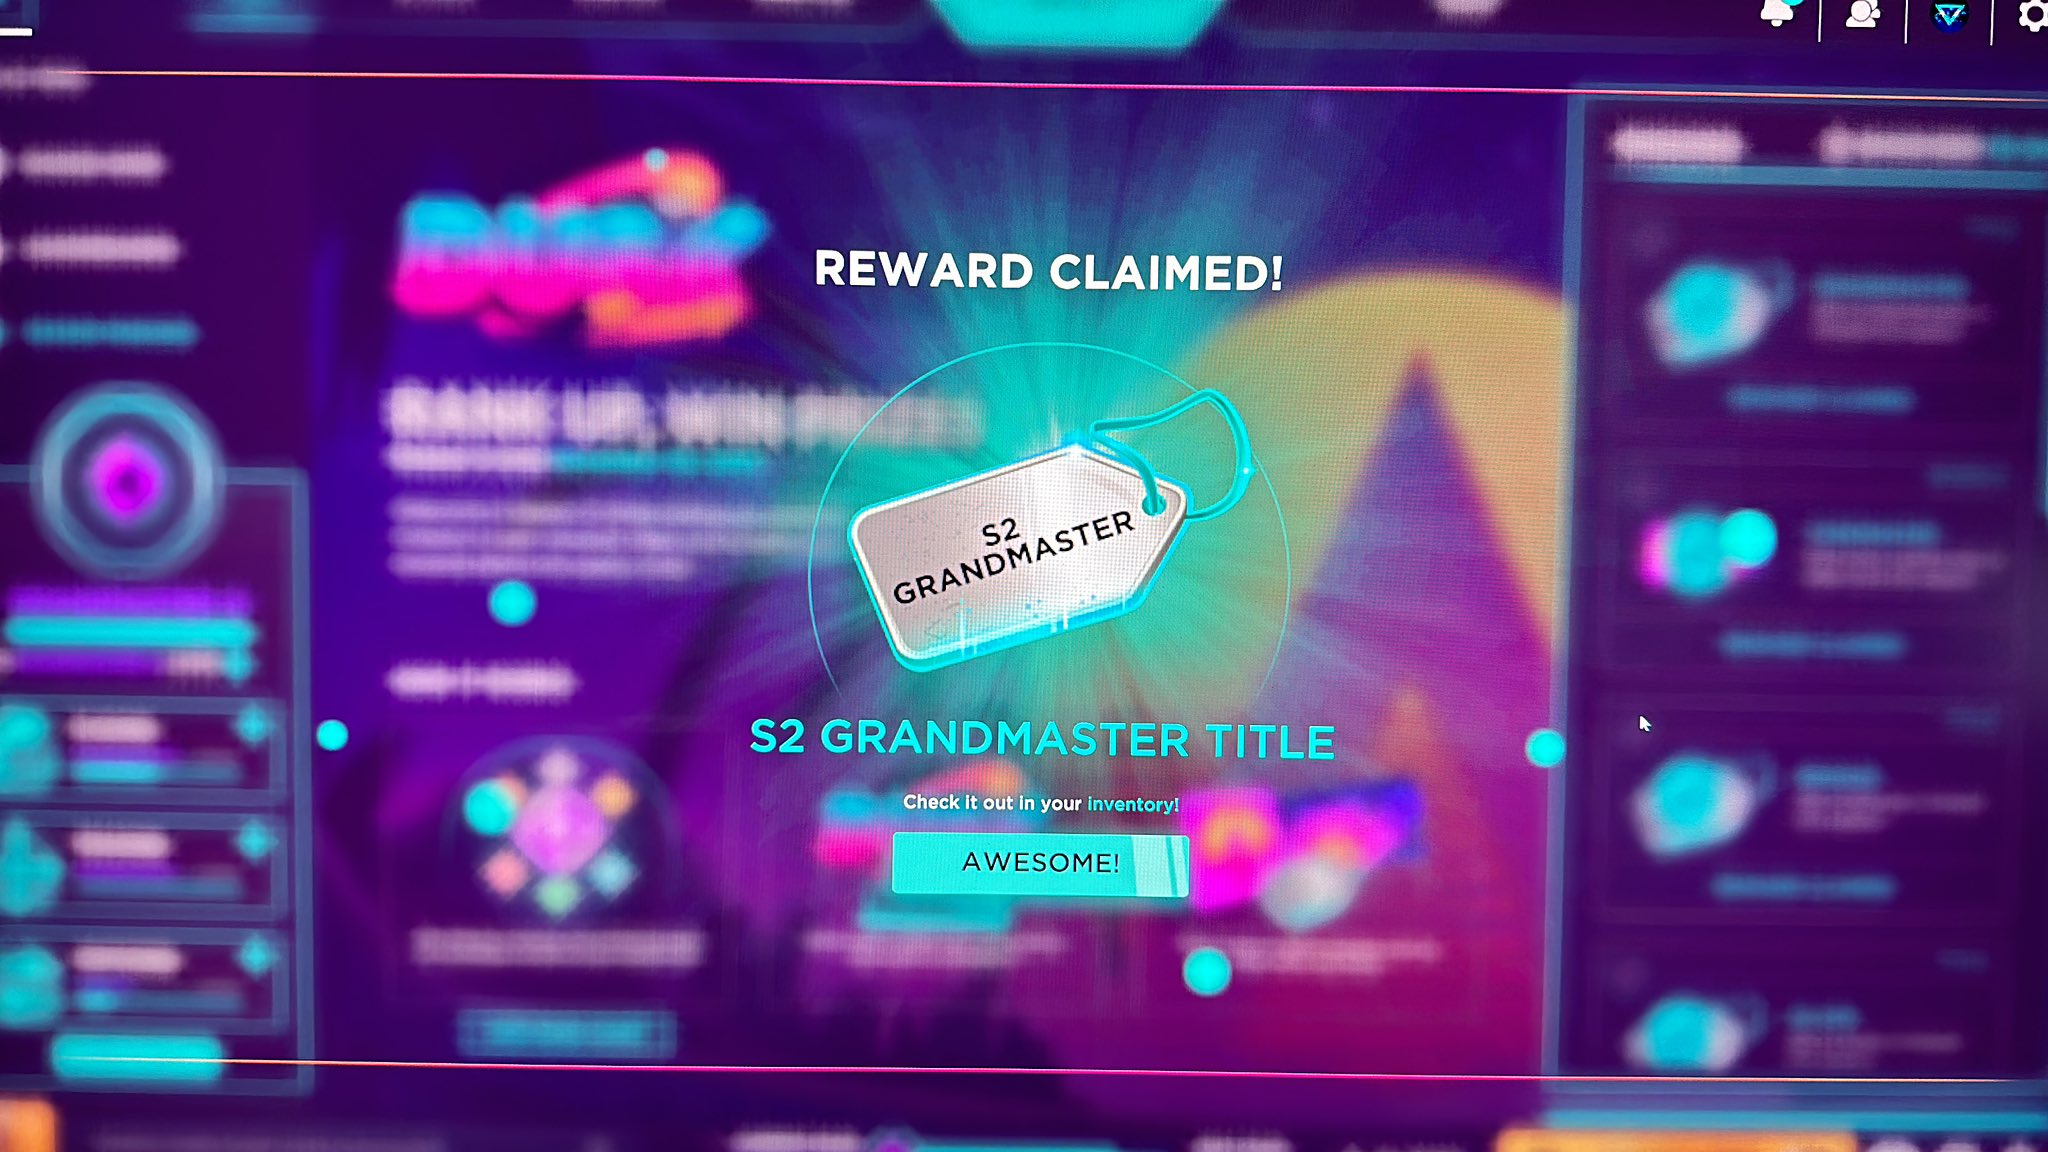 Grandmaster reward 😍 